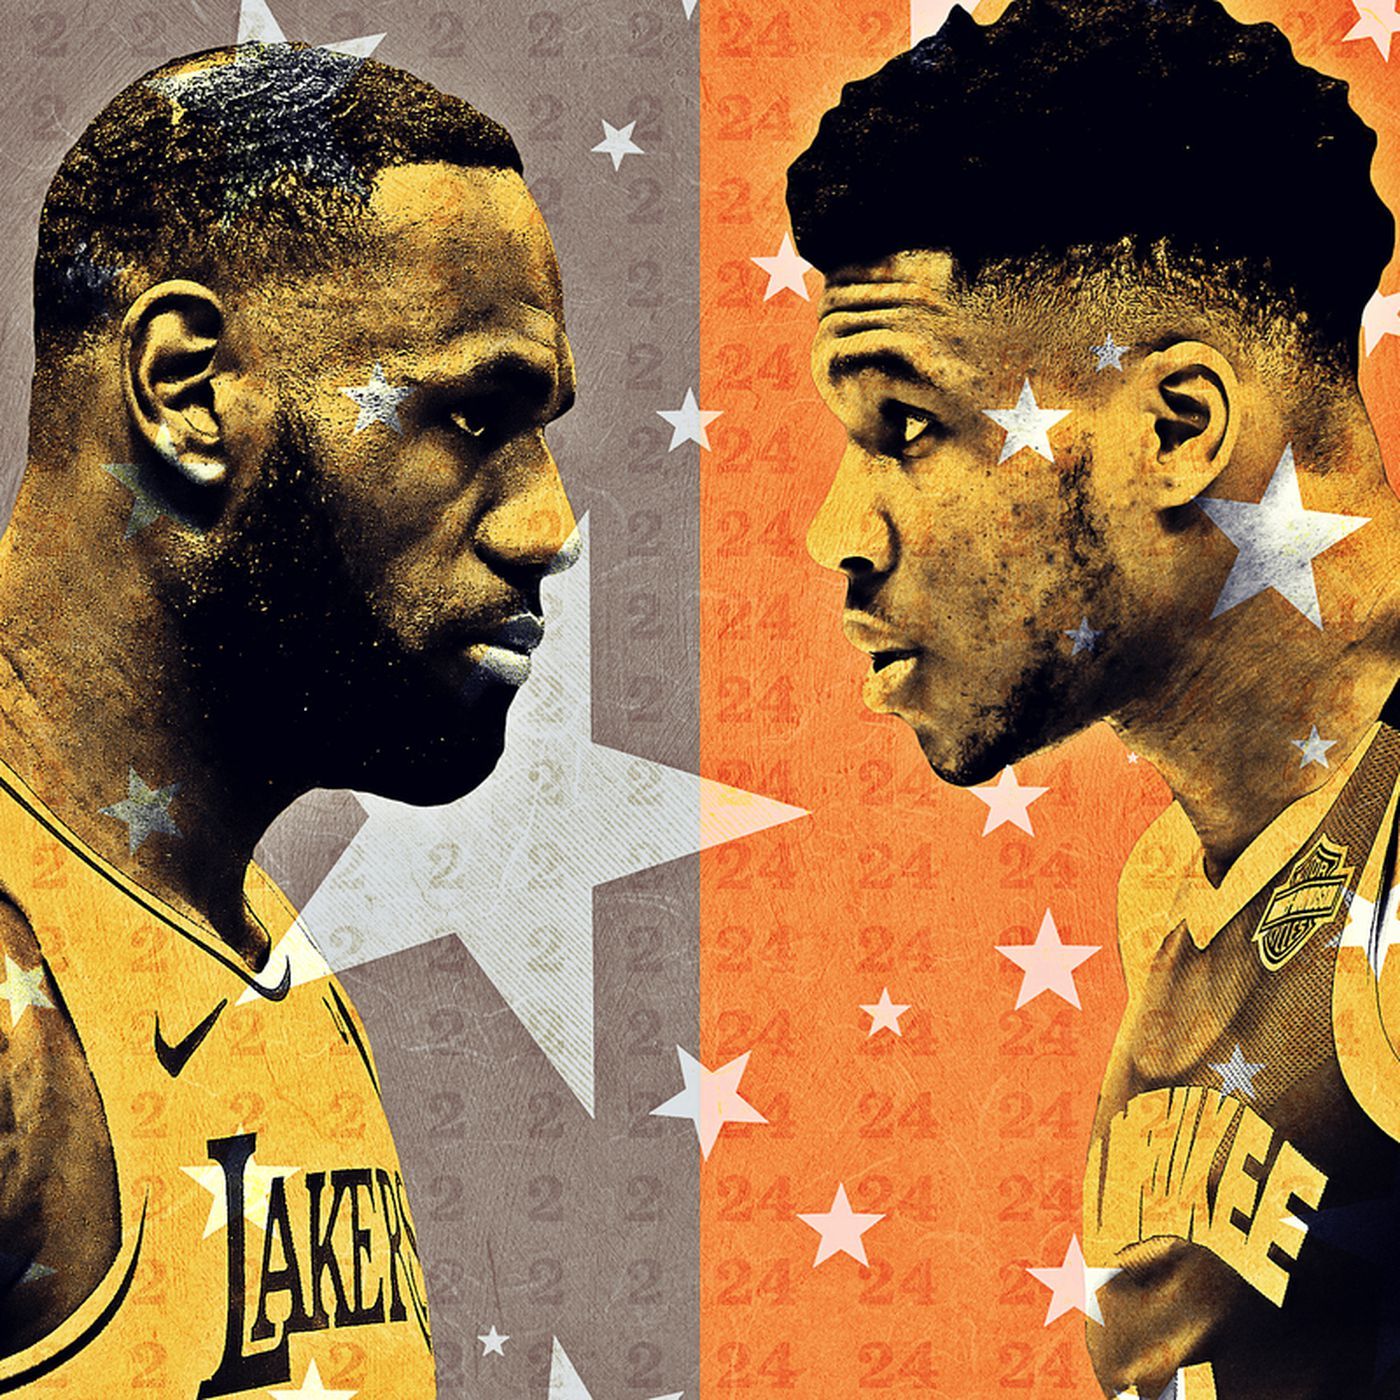 Three Takeaways From The 2020 NBA All Star Draft